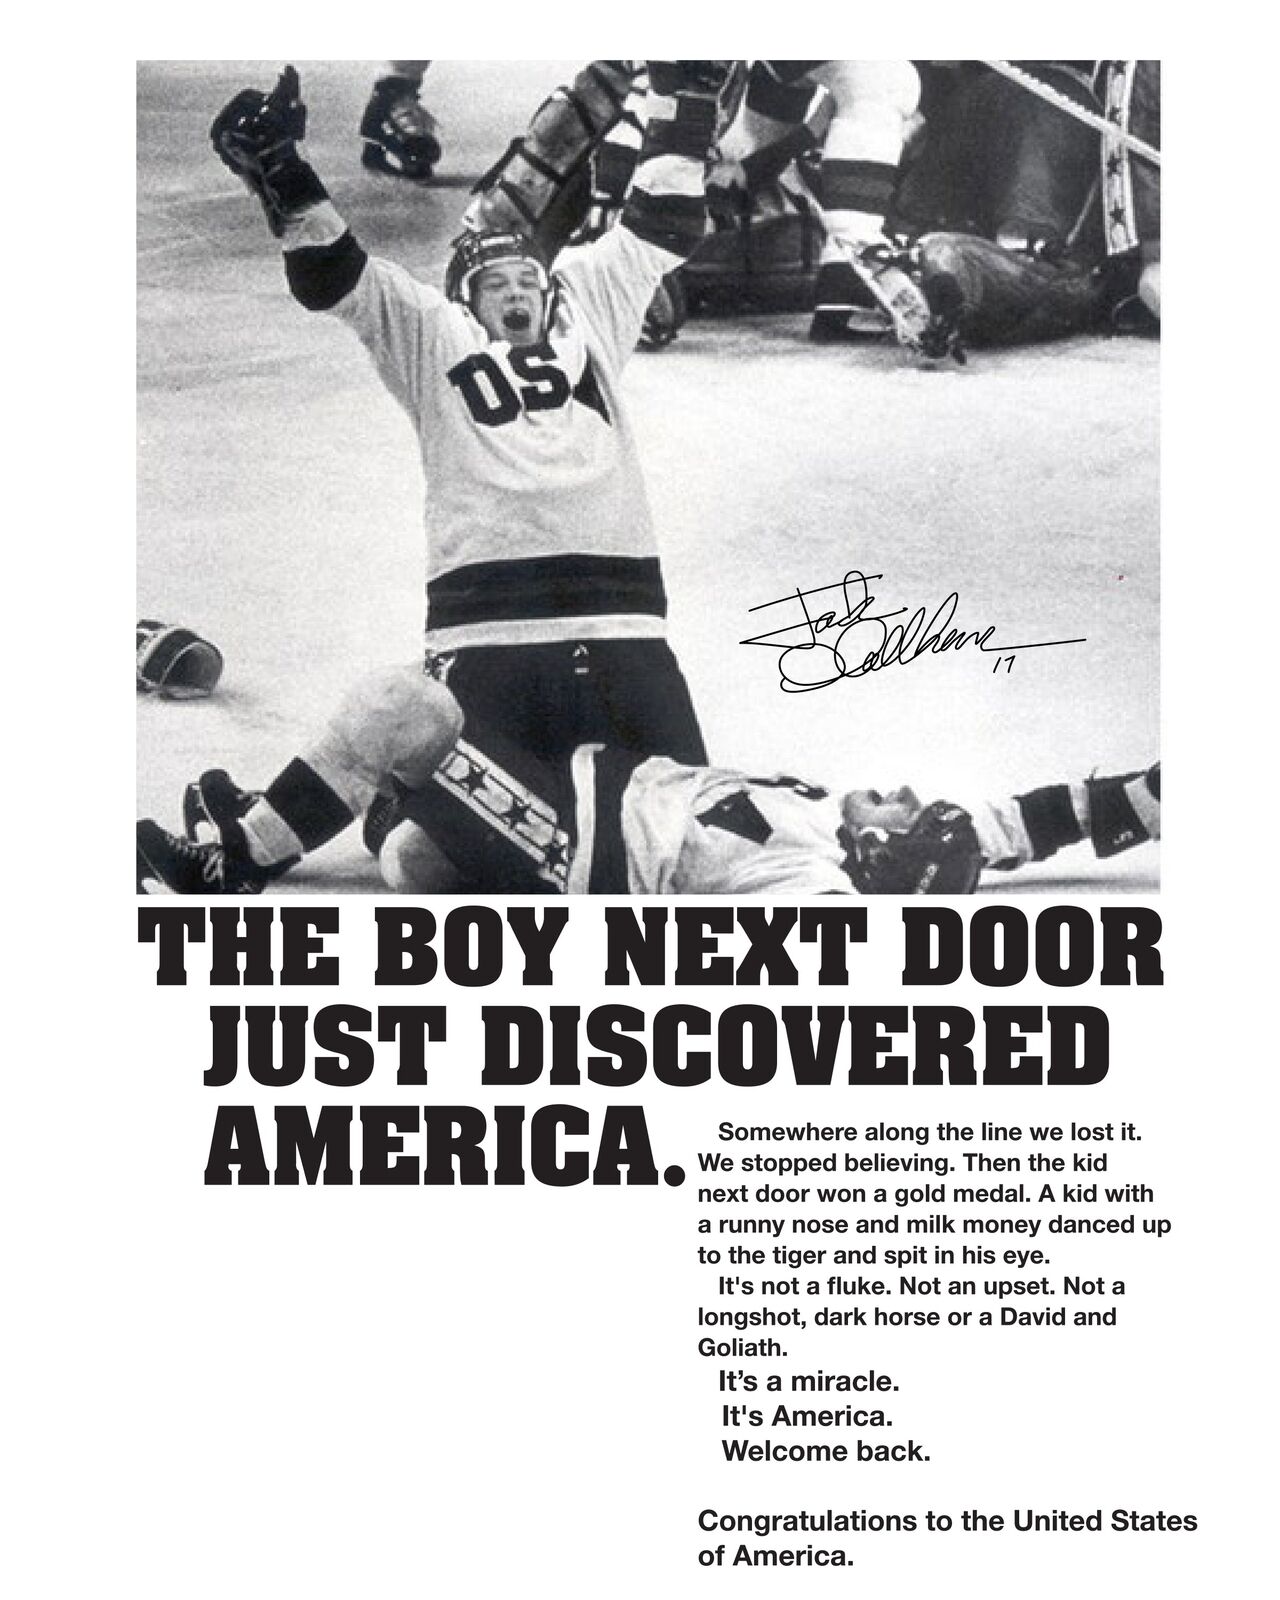 Jack O'Callahan Boy Next door Miracle on Ice 1980 USA Hockey Team Lake Placid Ph